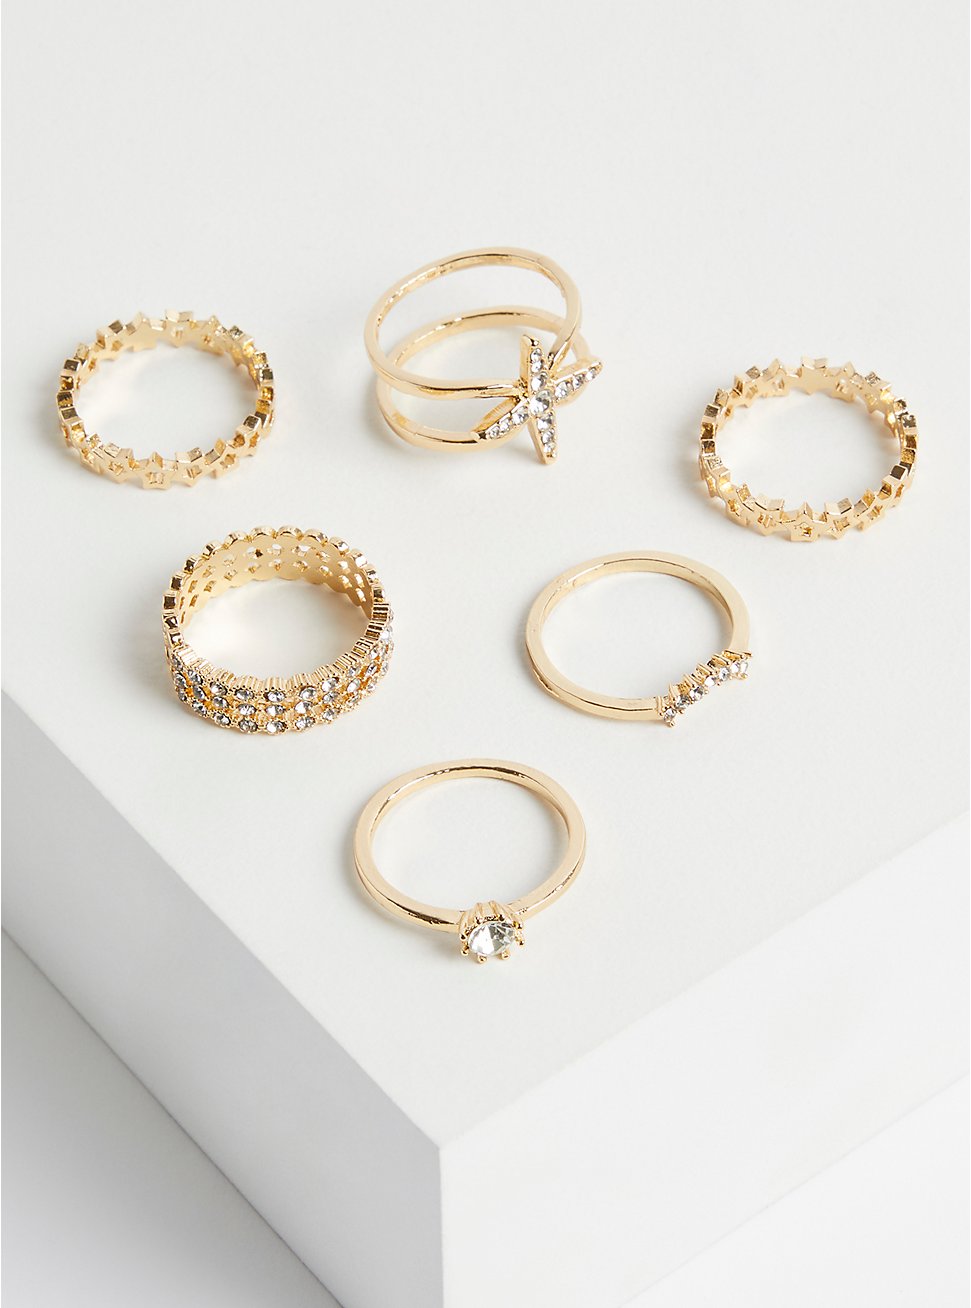 Plus Size Celestial Ring Set of 6, GOLD, hi-res